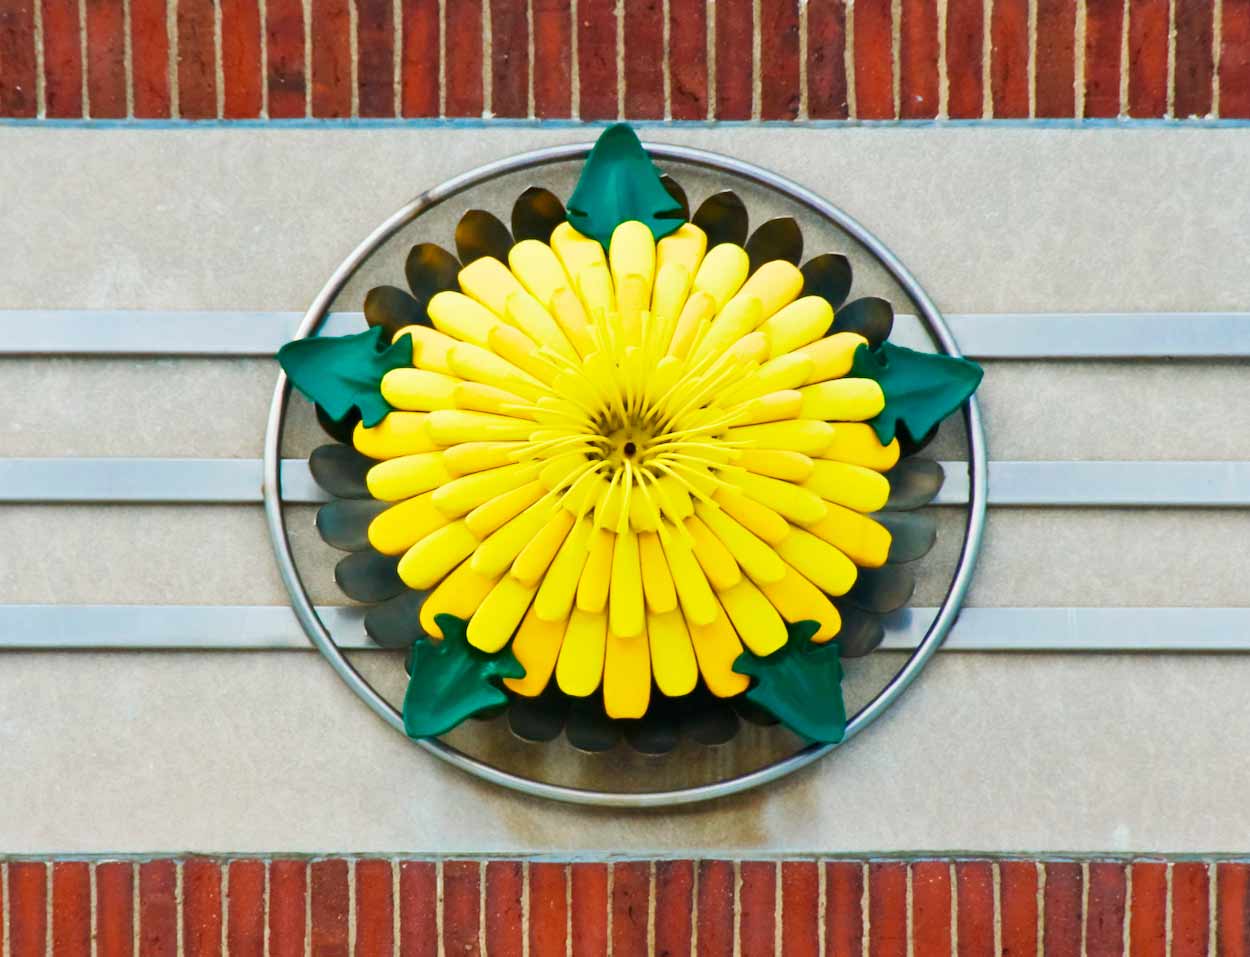 Dandelion sculpture at University of Rochester